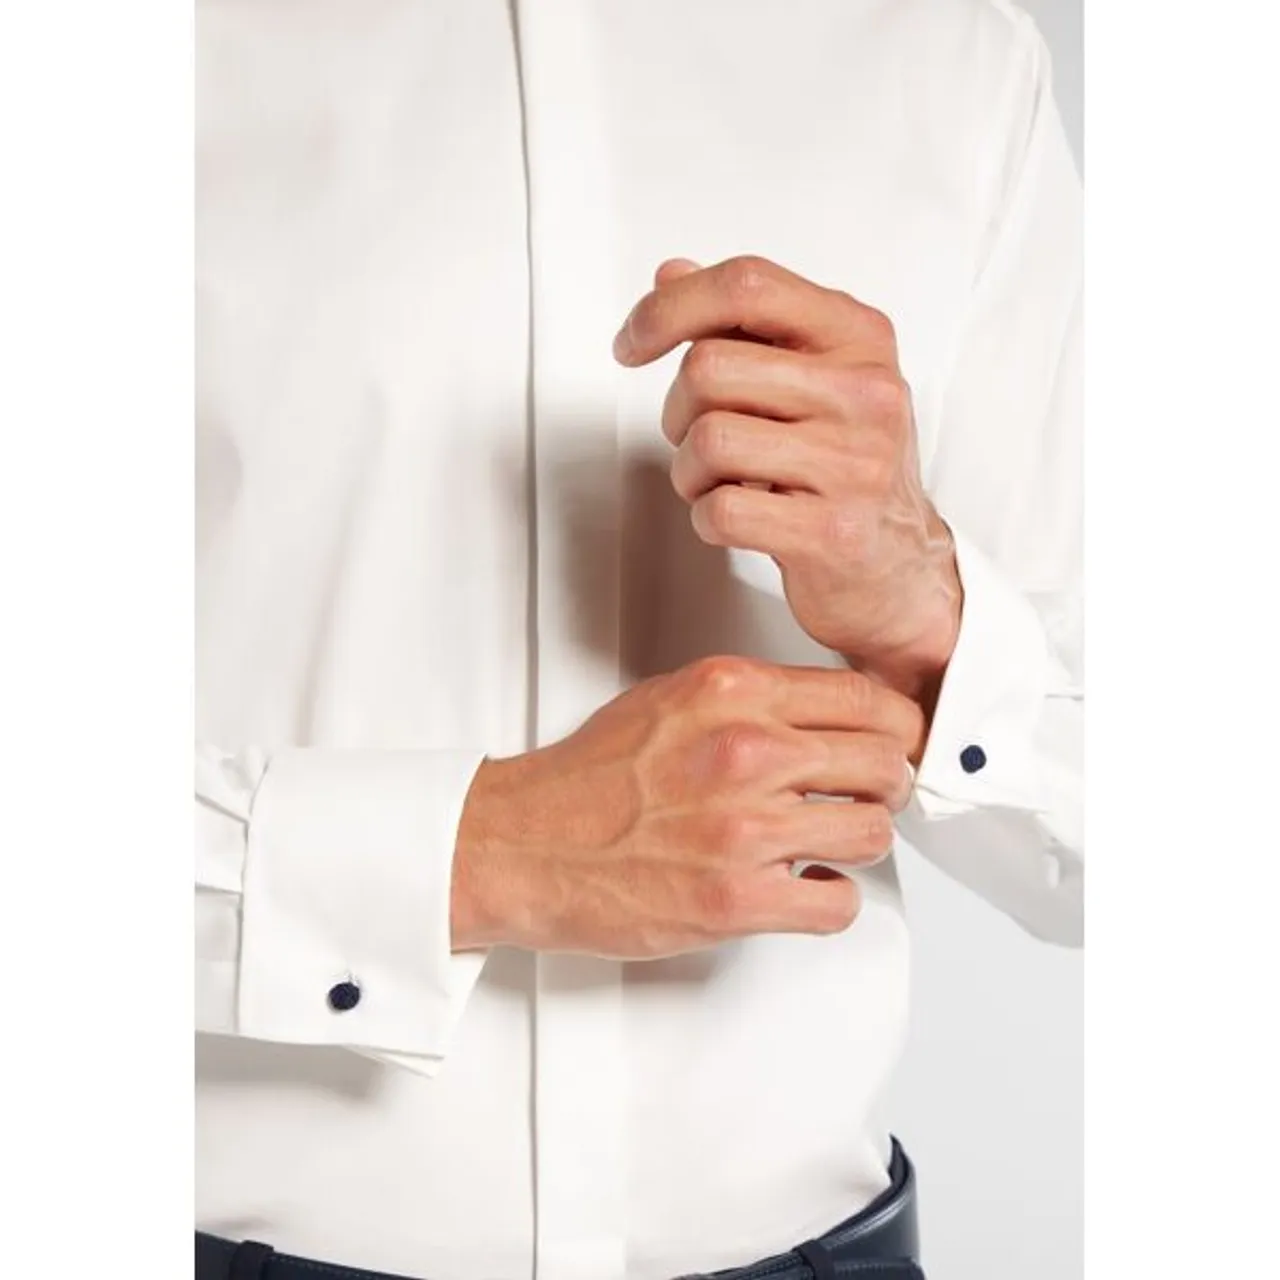 Langarmhemd ETERNA "MODERN FIT" Gr. 43, verlängerte Ärmellängen, beige Herren Hemden Langarm